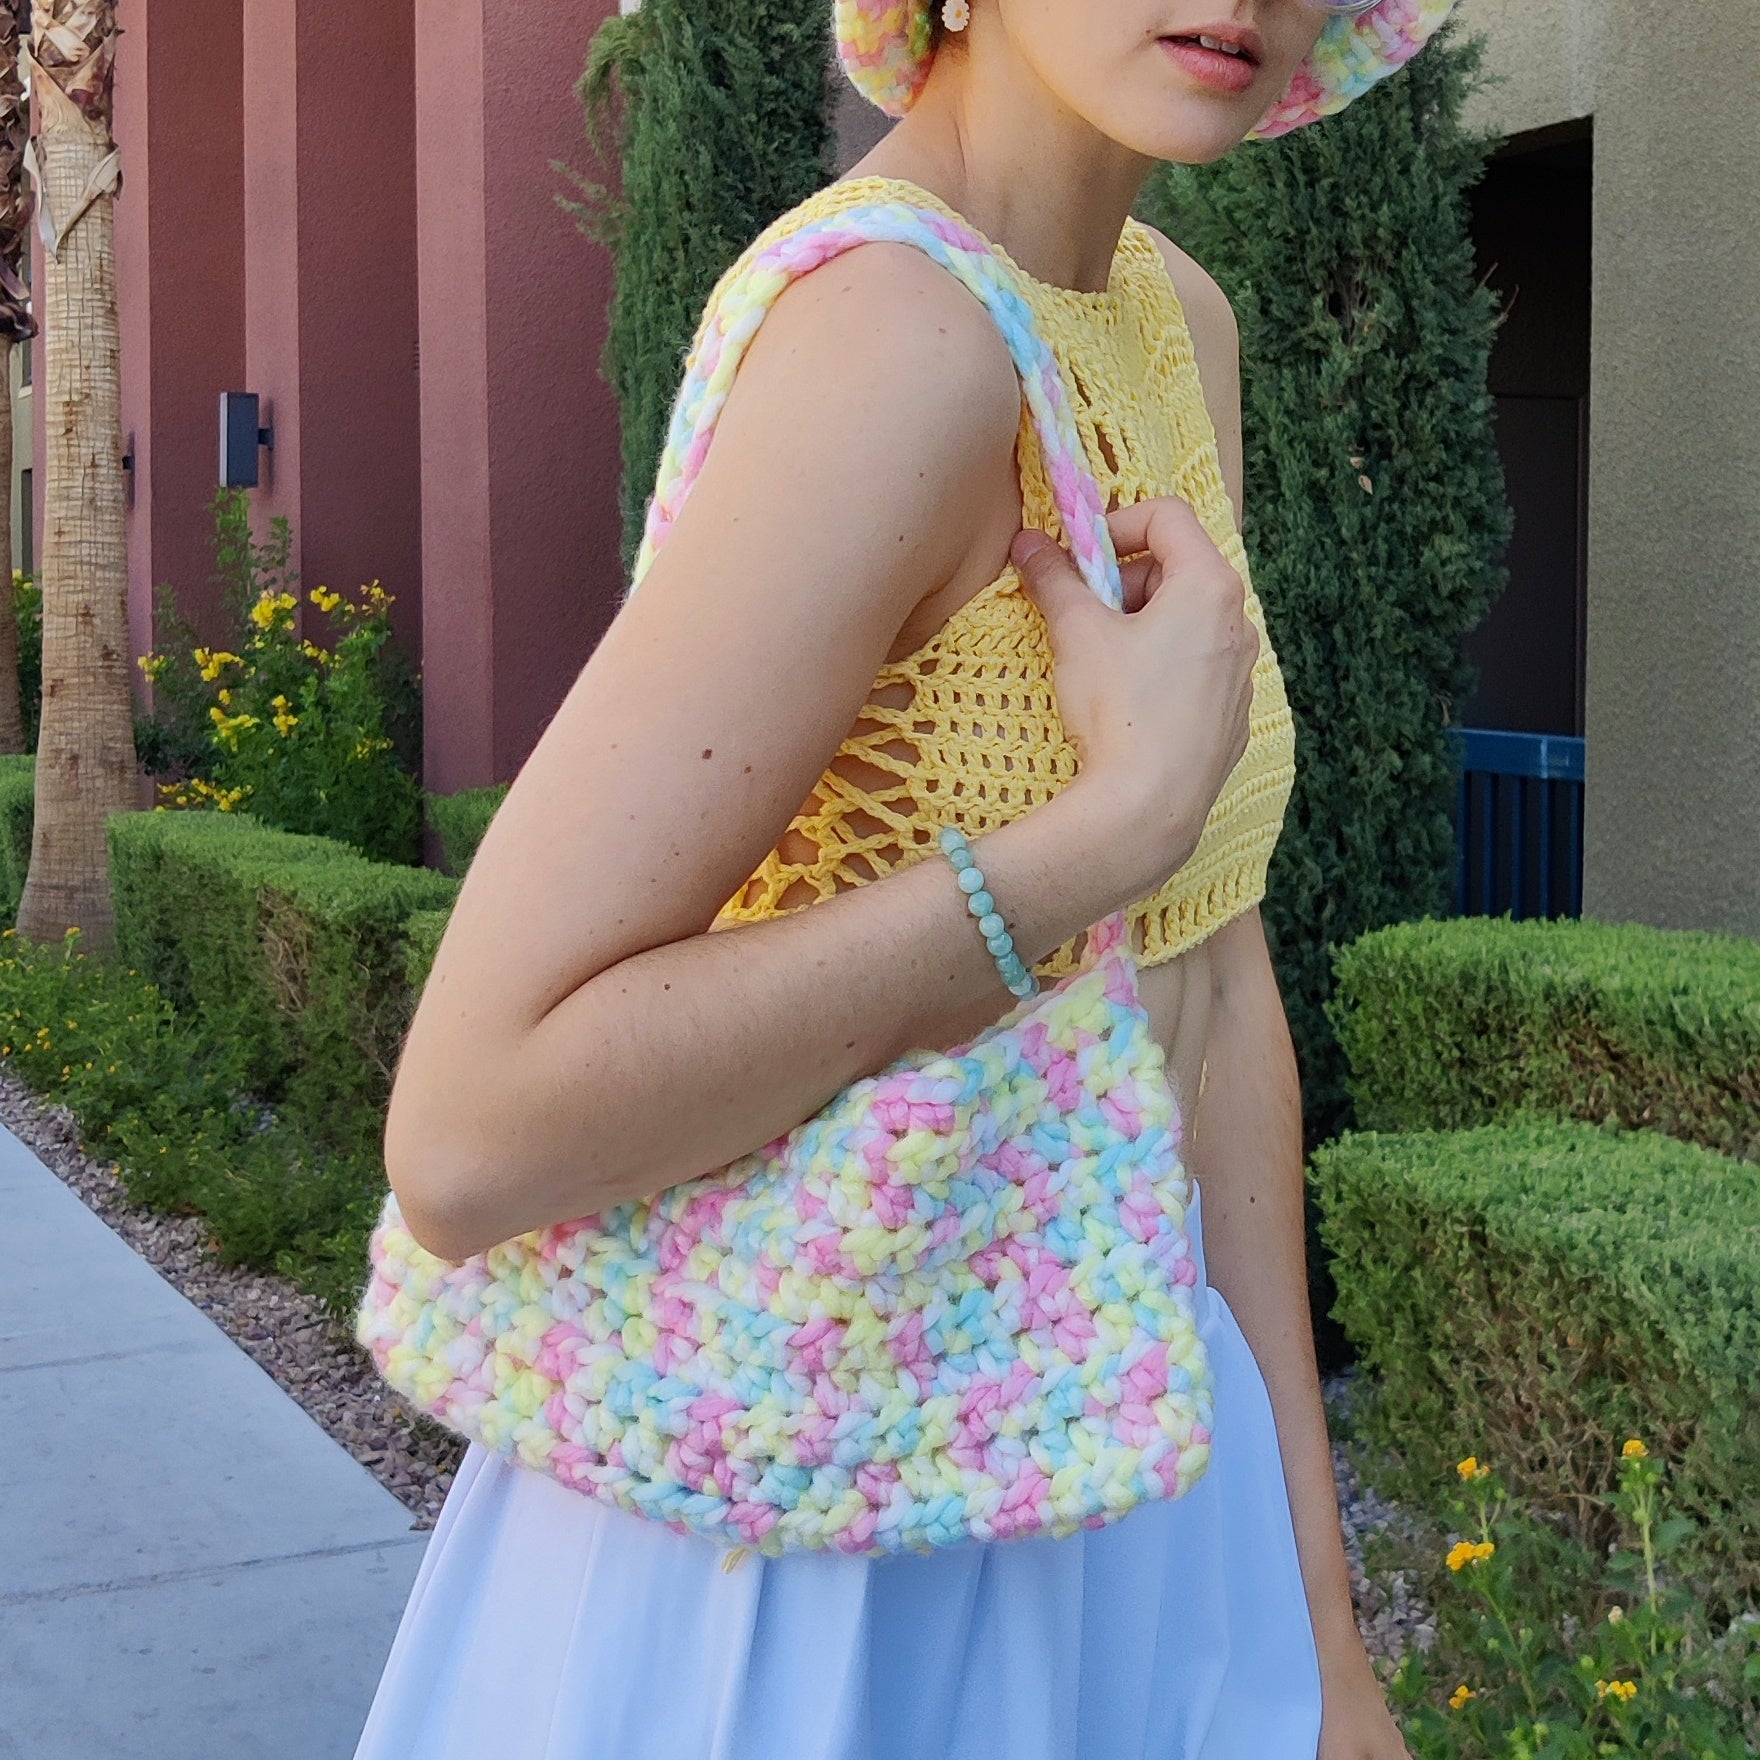 Cloud Nine Chunky Shoulder Bag Crochet Pattern  Crochet Purse Tutorial –  The Cozy Tangerine